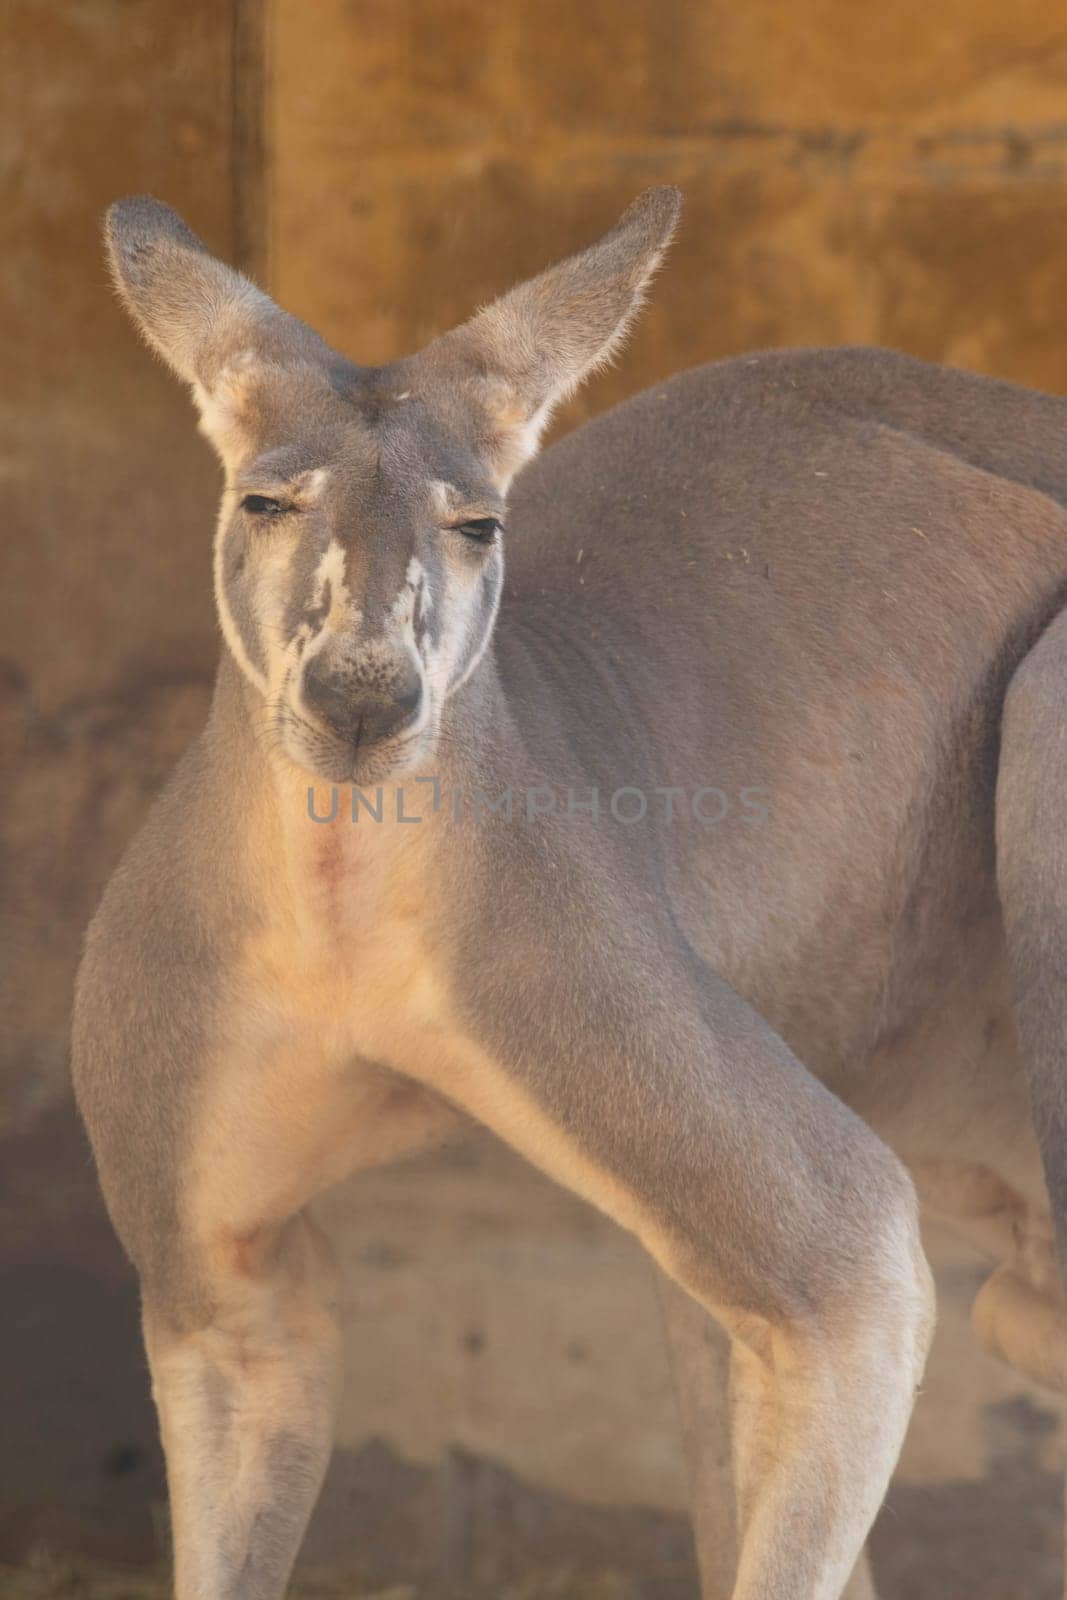 Large kangaroo grazing on the grass by gordiza